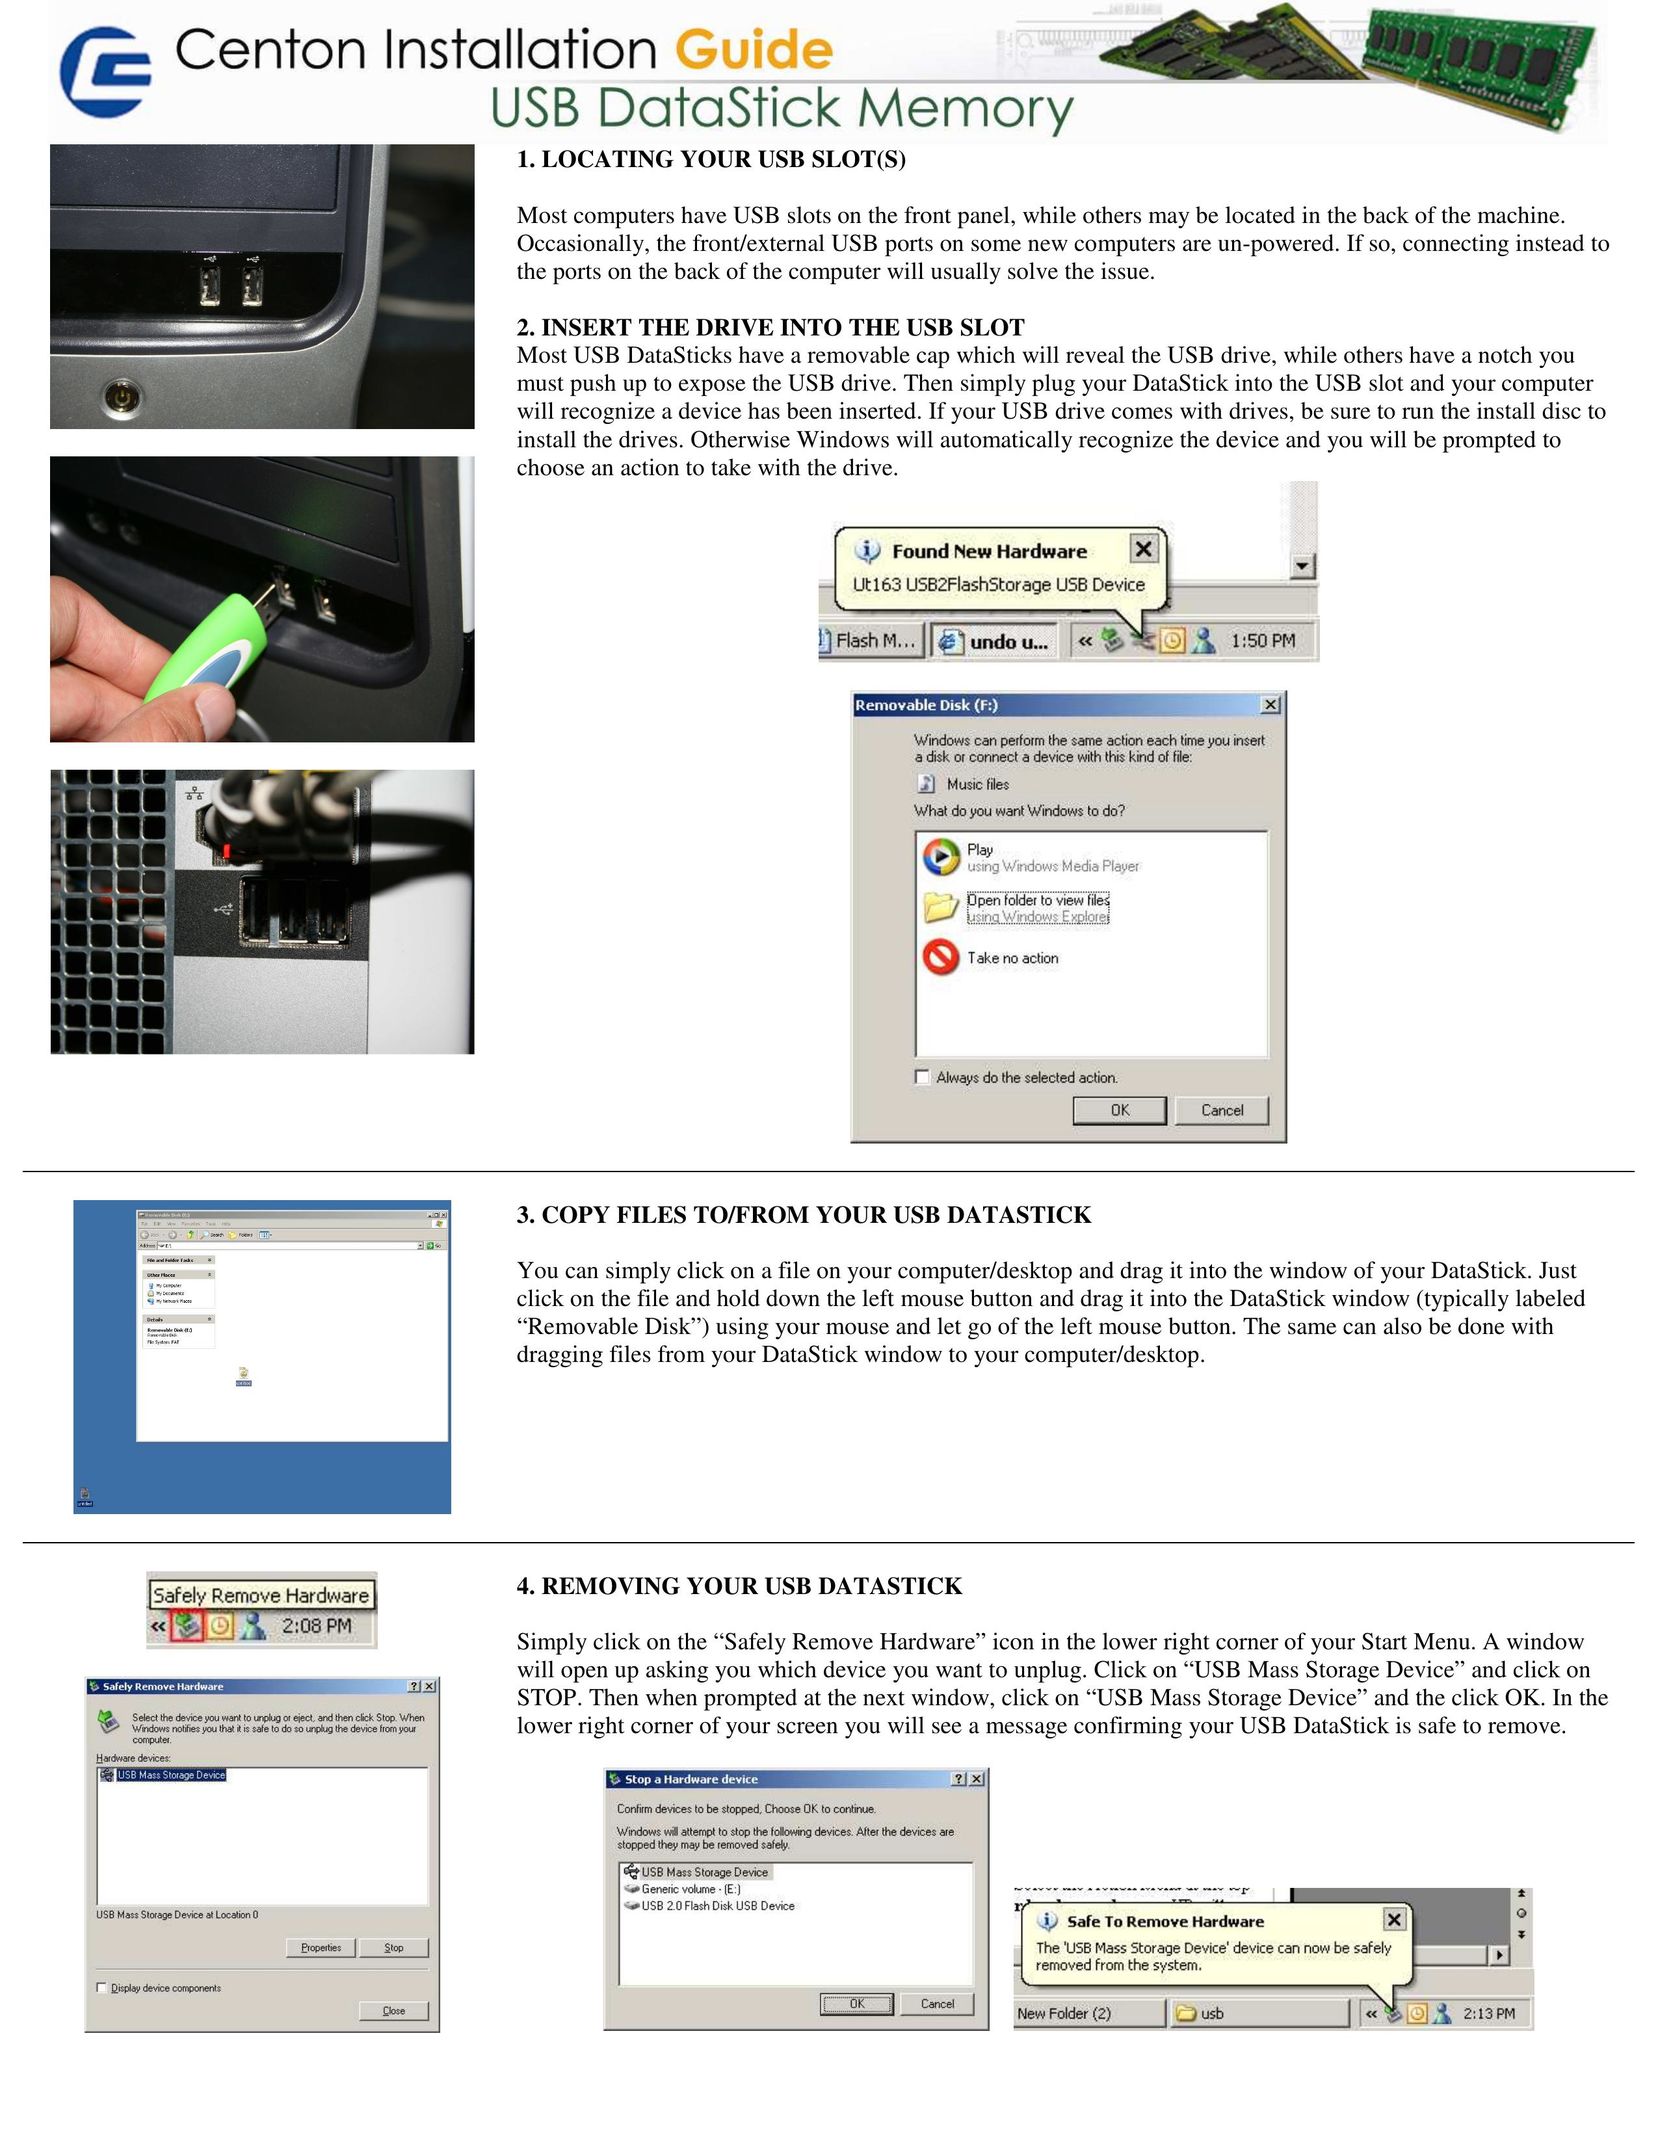 Centon electronic DSG2GB-001 Computer Accessories User Manual